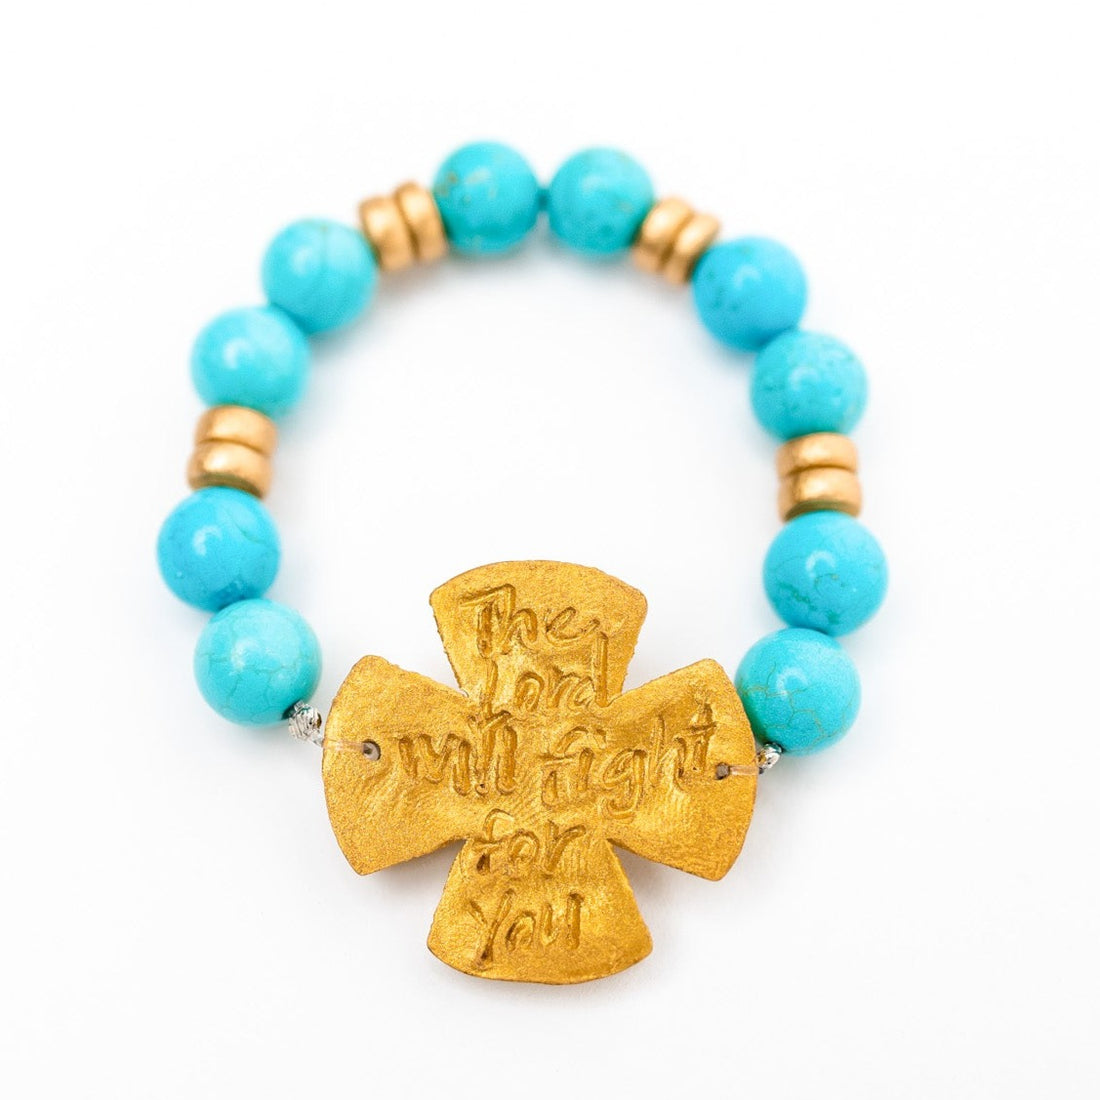 Turquoise Jade with Friendship Cross Bracelet